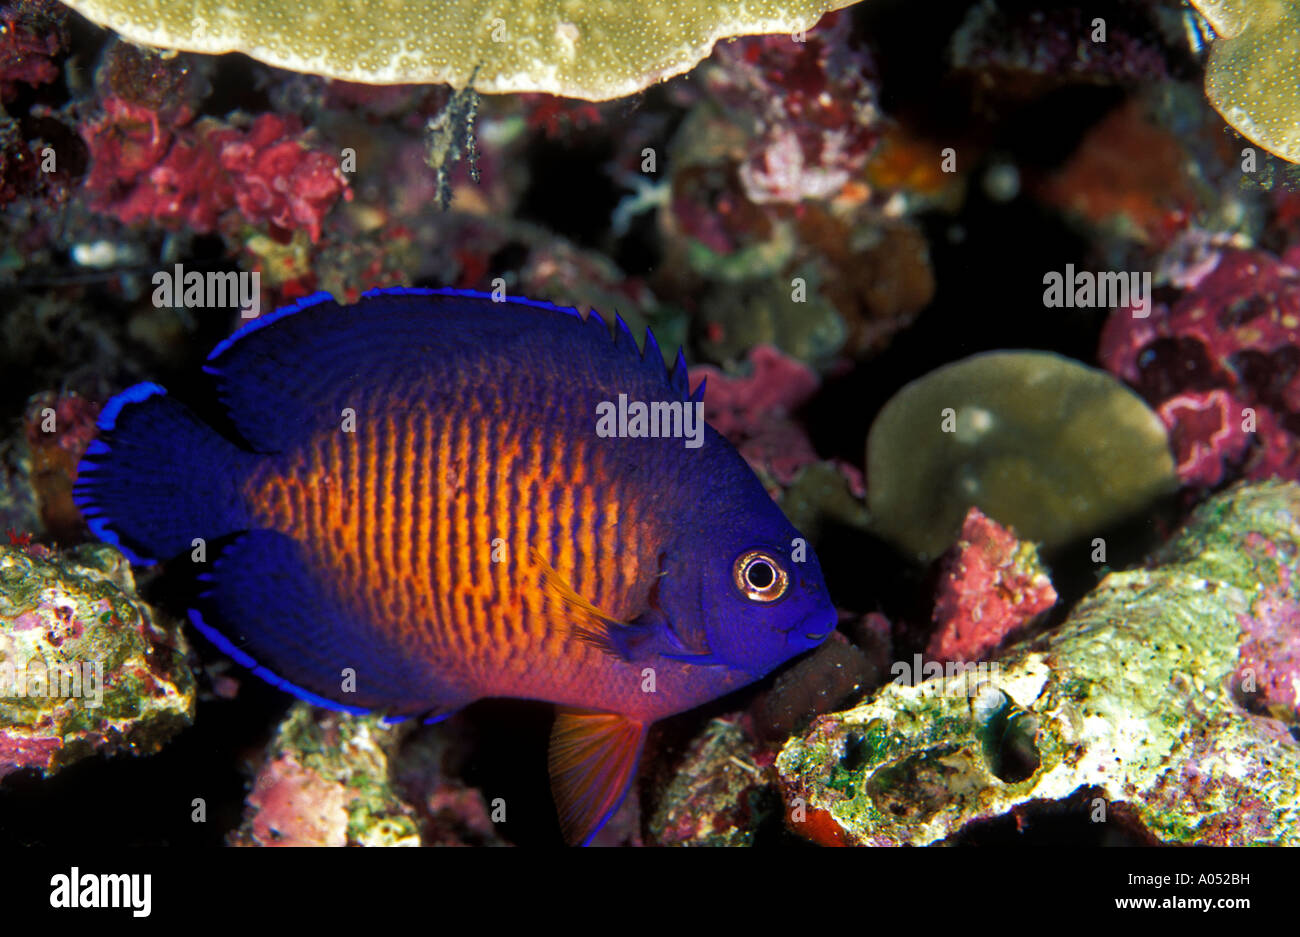 Coral beauty angelfish, Centropyge bispinosus, Tukang Besi Islands Sulawesi Indonesia. Stock Photo